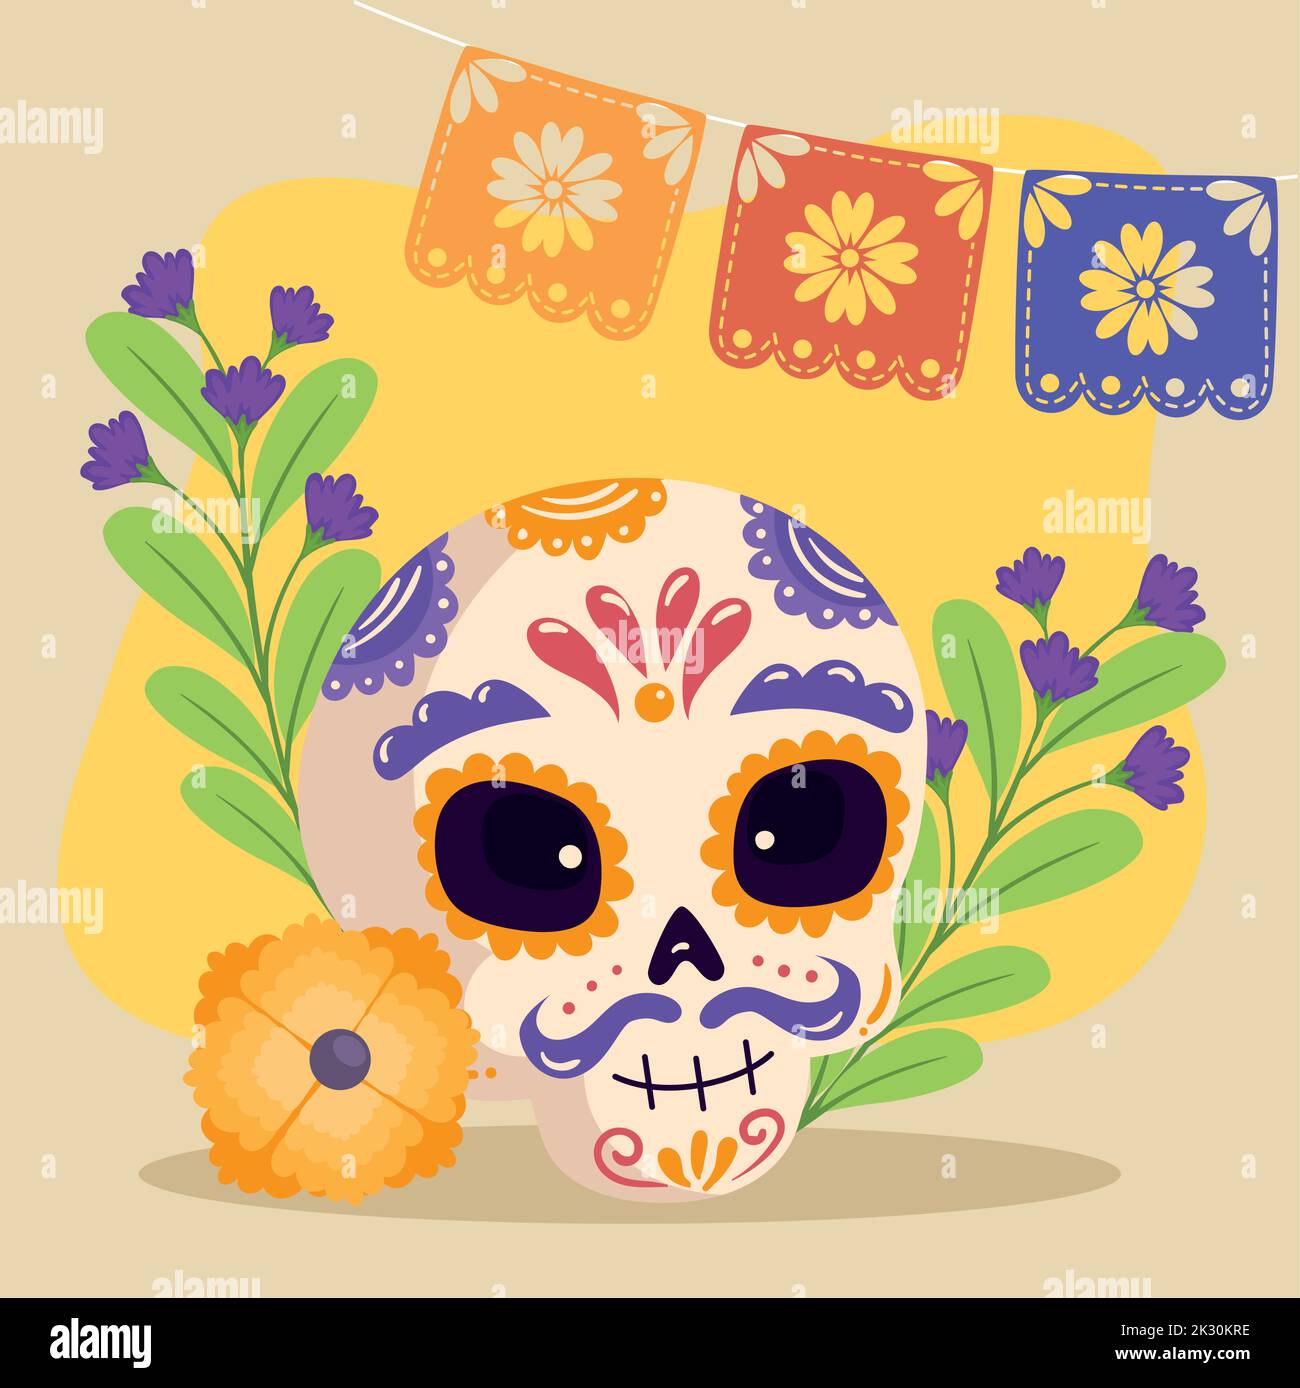 dia de los muertos skull with garlands poster Stock Vector